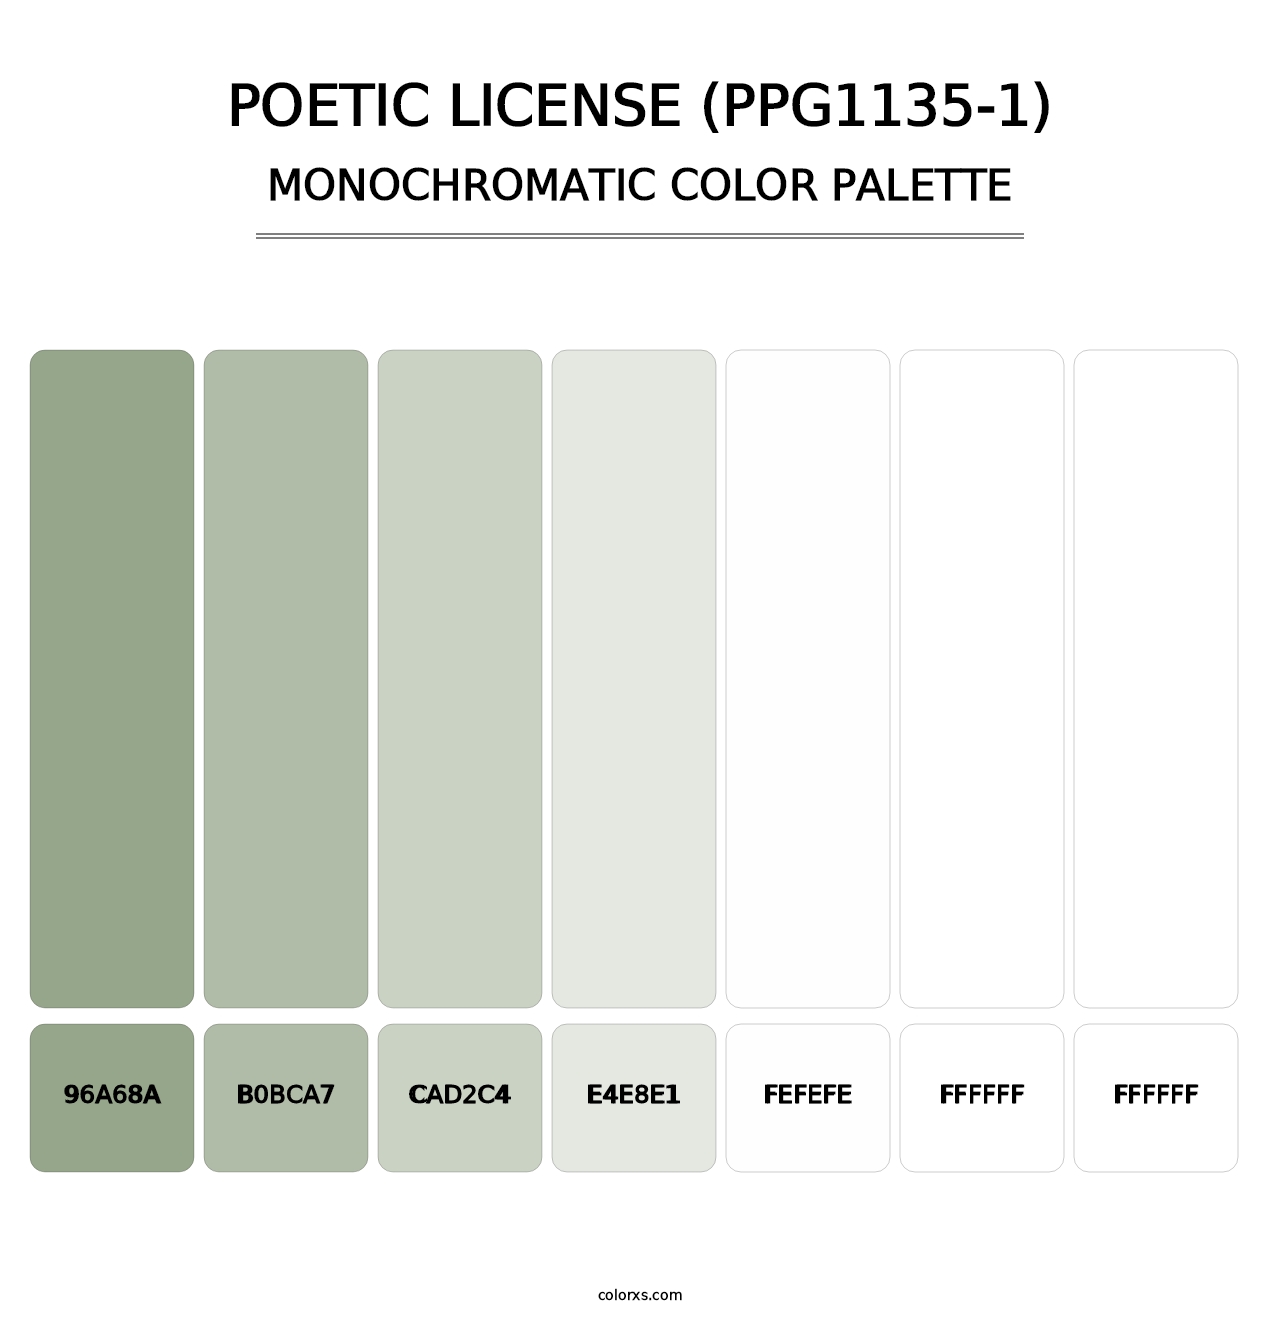 Poetic License (PPG1135-1) - Monochromatic Color Palette